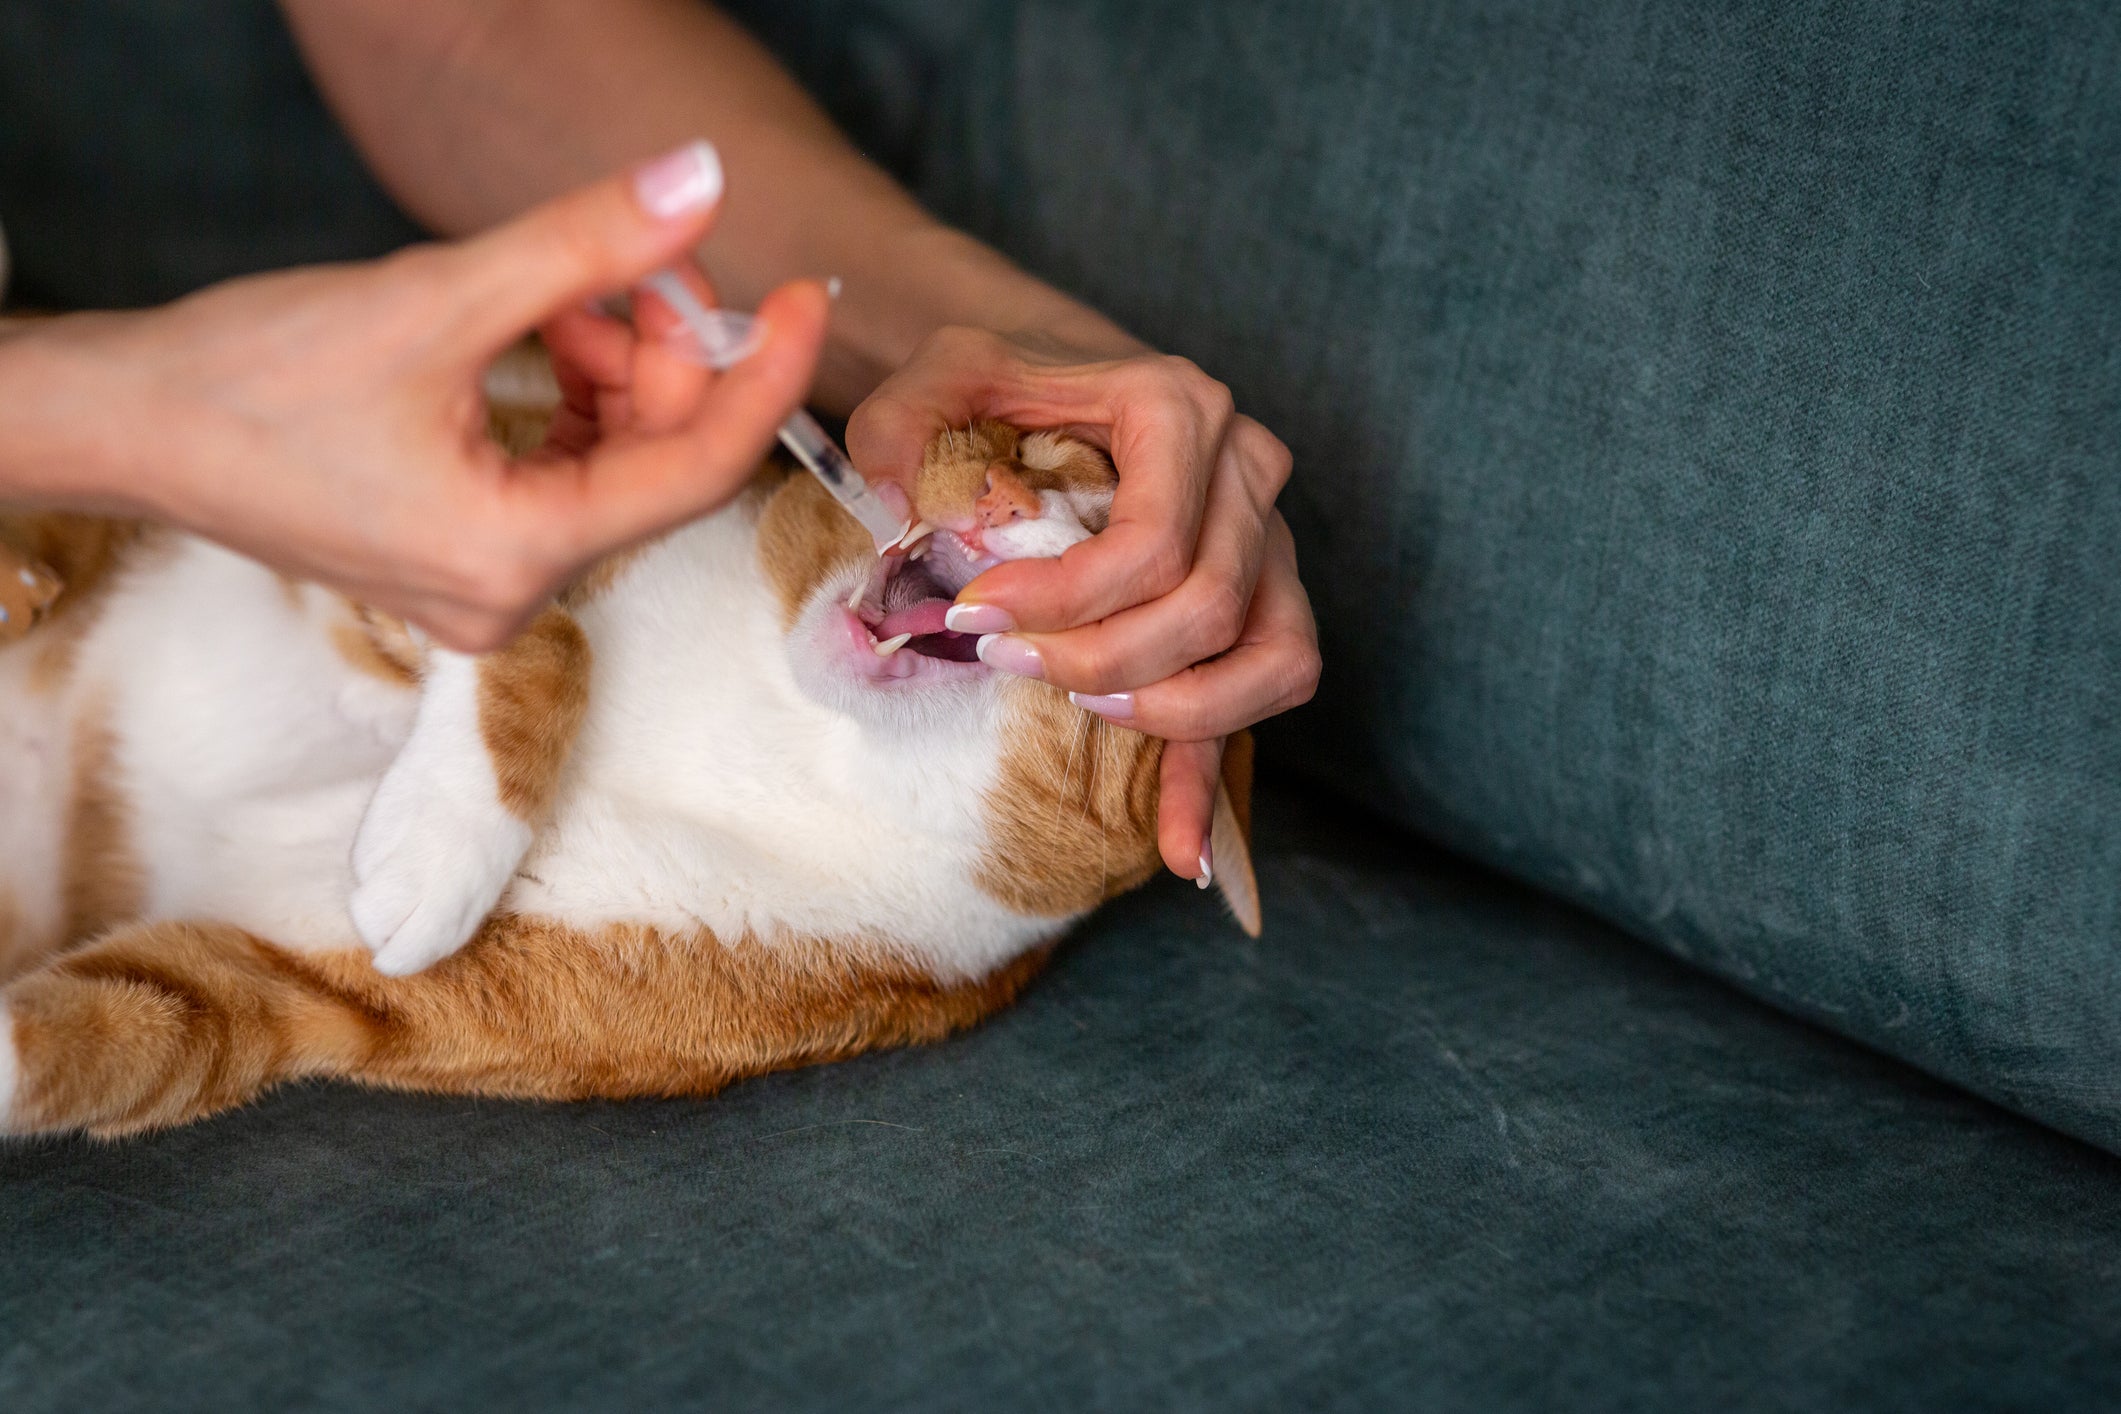 Tutora dando remédio na boca de gato laranja e branco com seringa